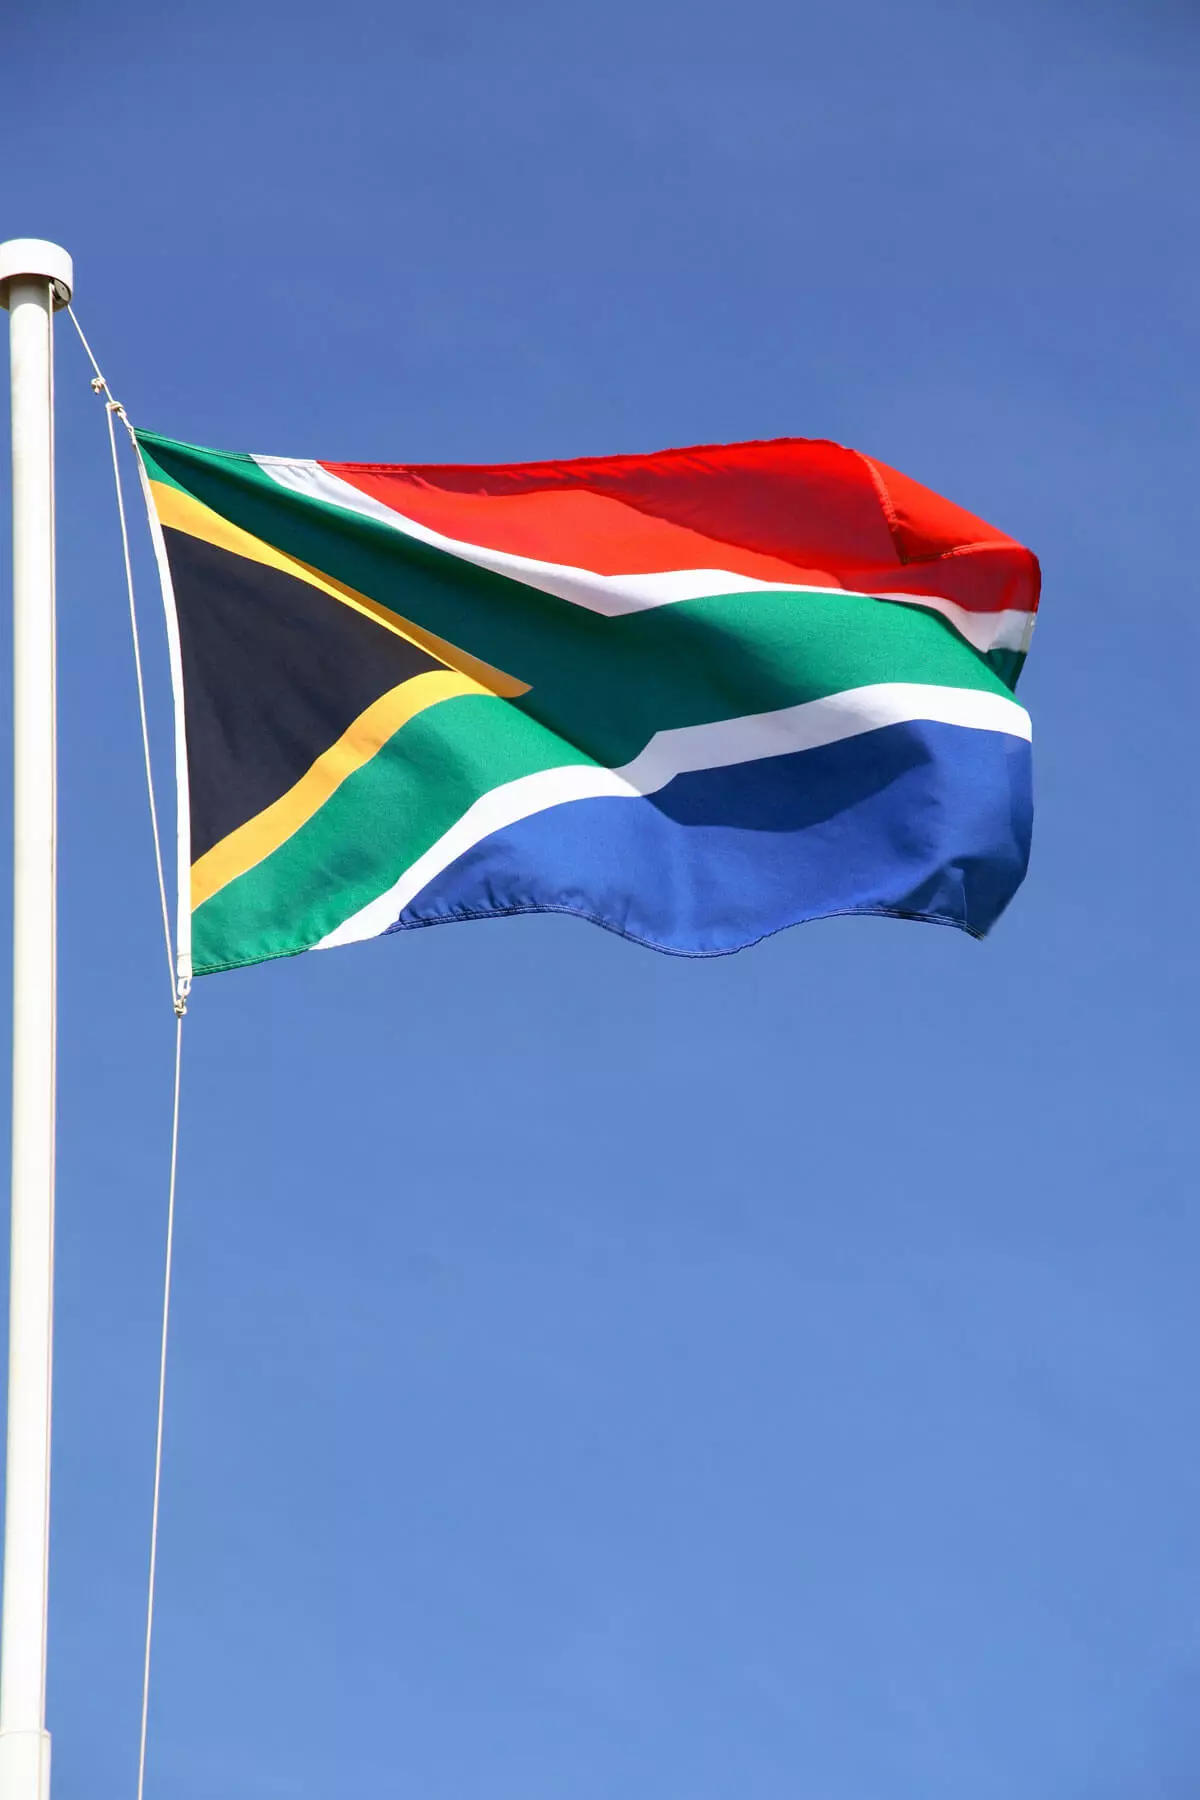 Die gehisste Flagge Südafrikas vor blauem Himmel.